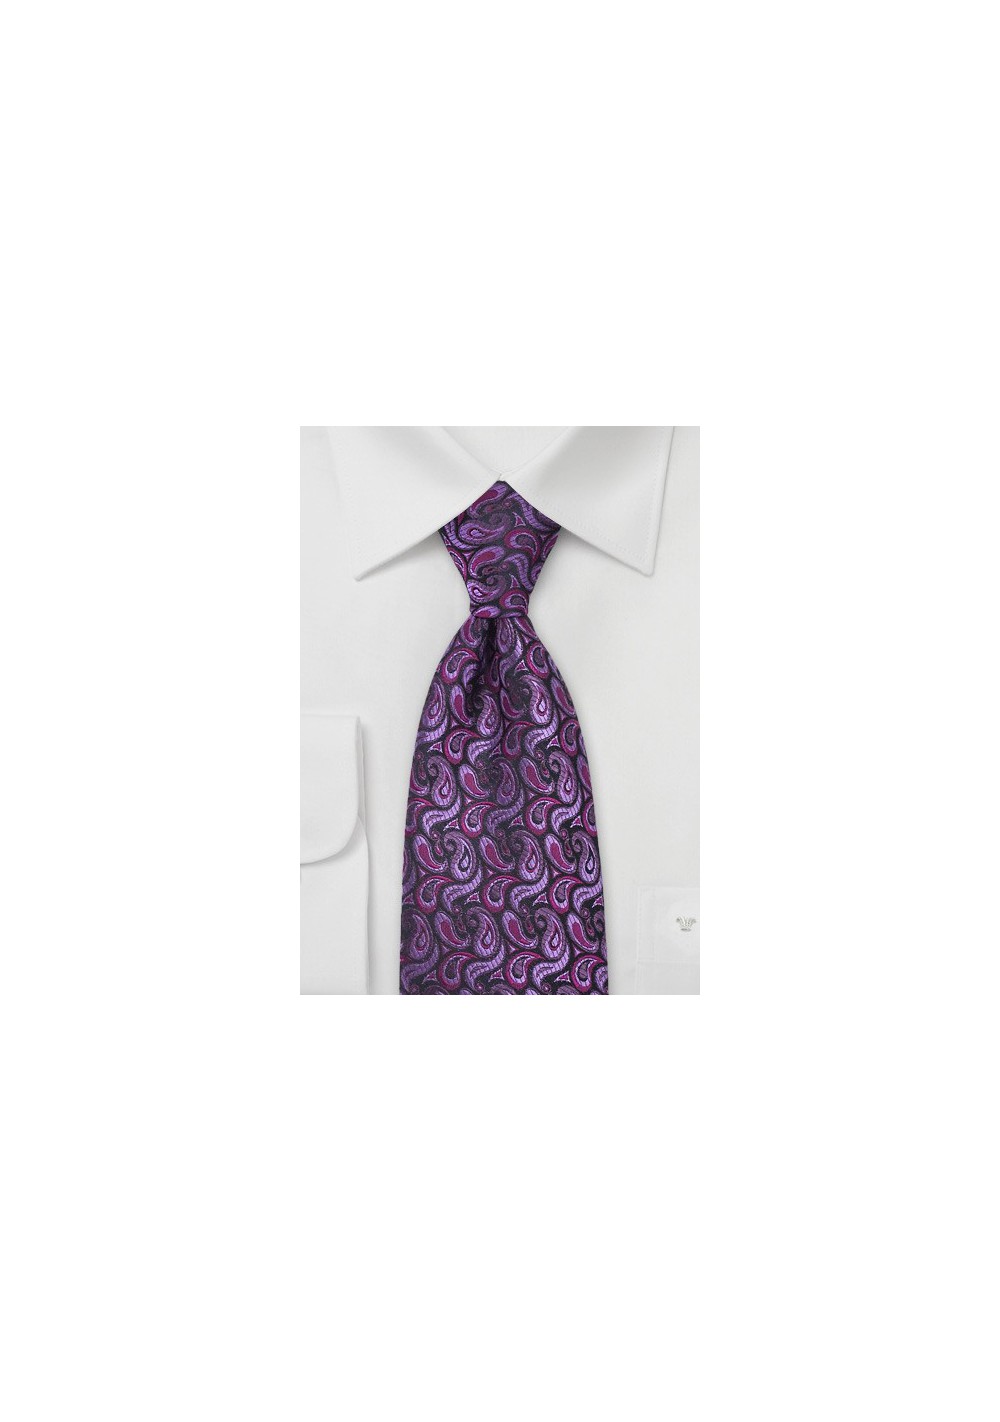 Purple, Lavender, & Black Paisley Tie